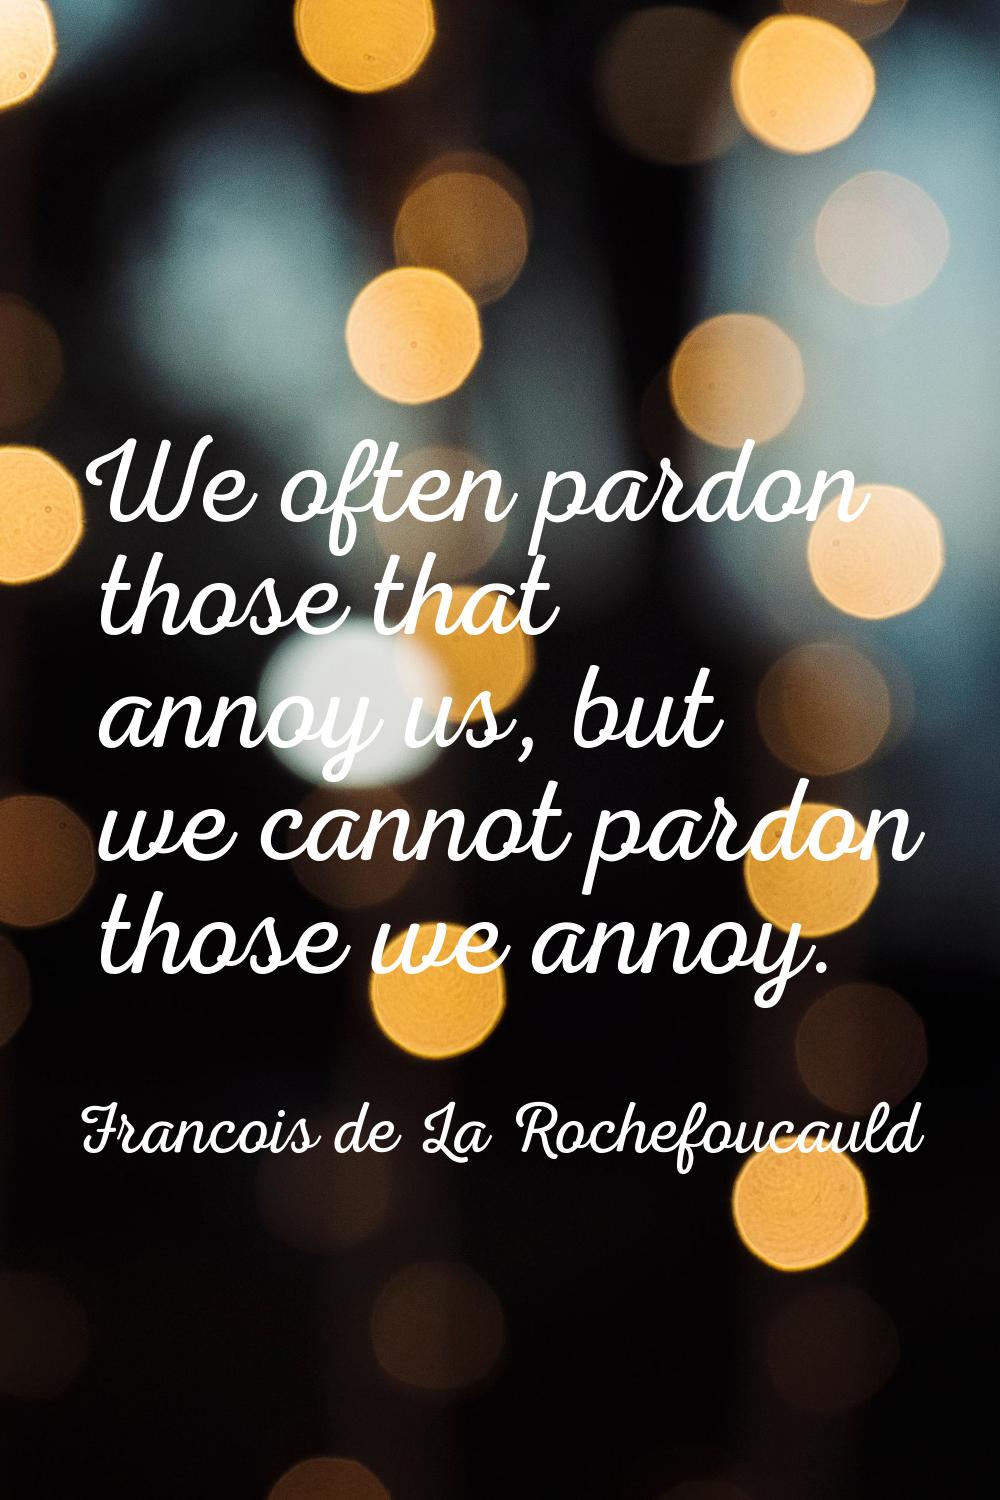 We often pardon those that annoy us, but we cannot pardon those we annoy.